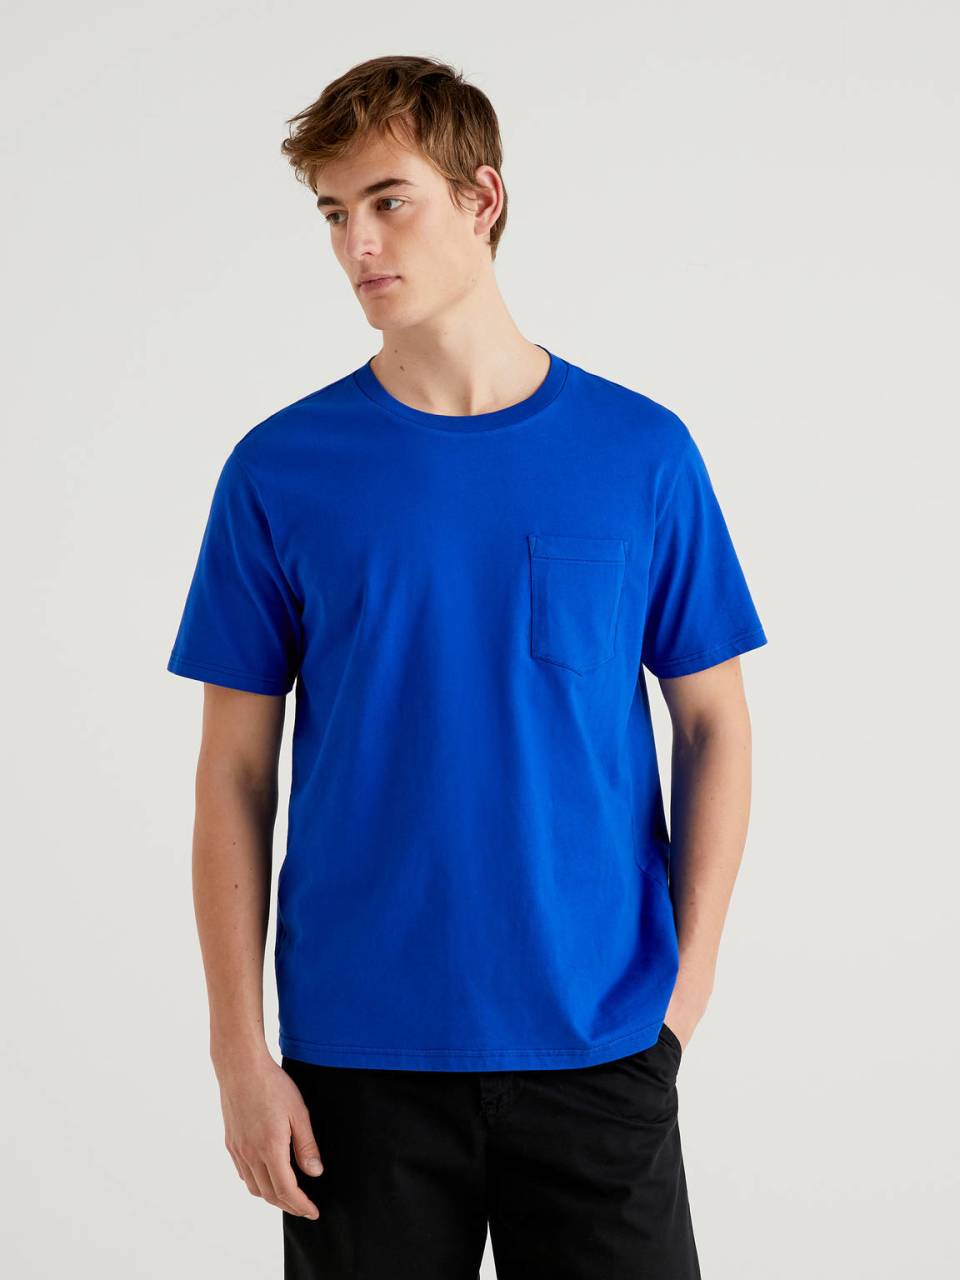 Benetton 100% cotton t-shirt with pocket - 3BL0J19G5_19R